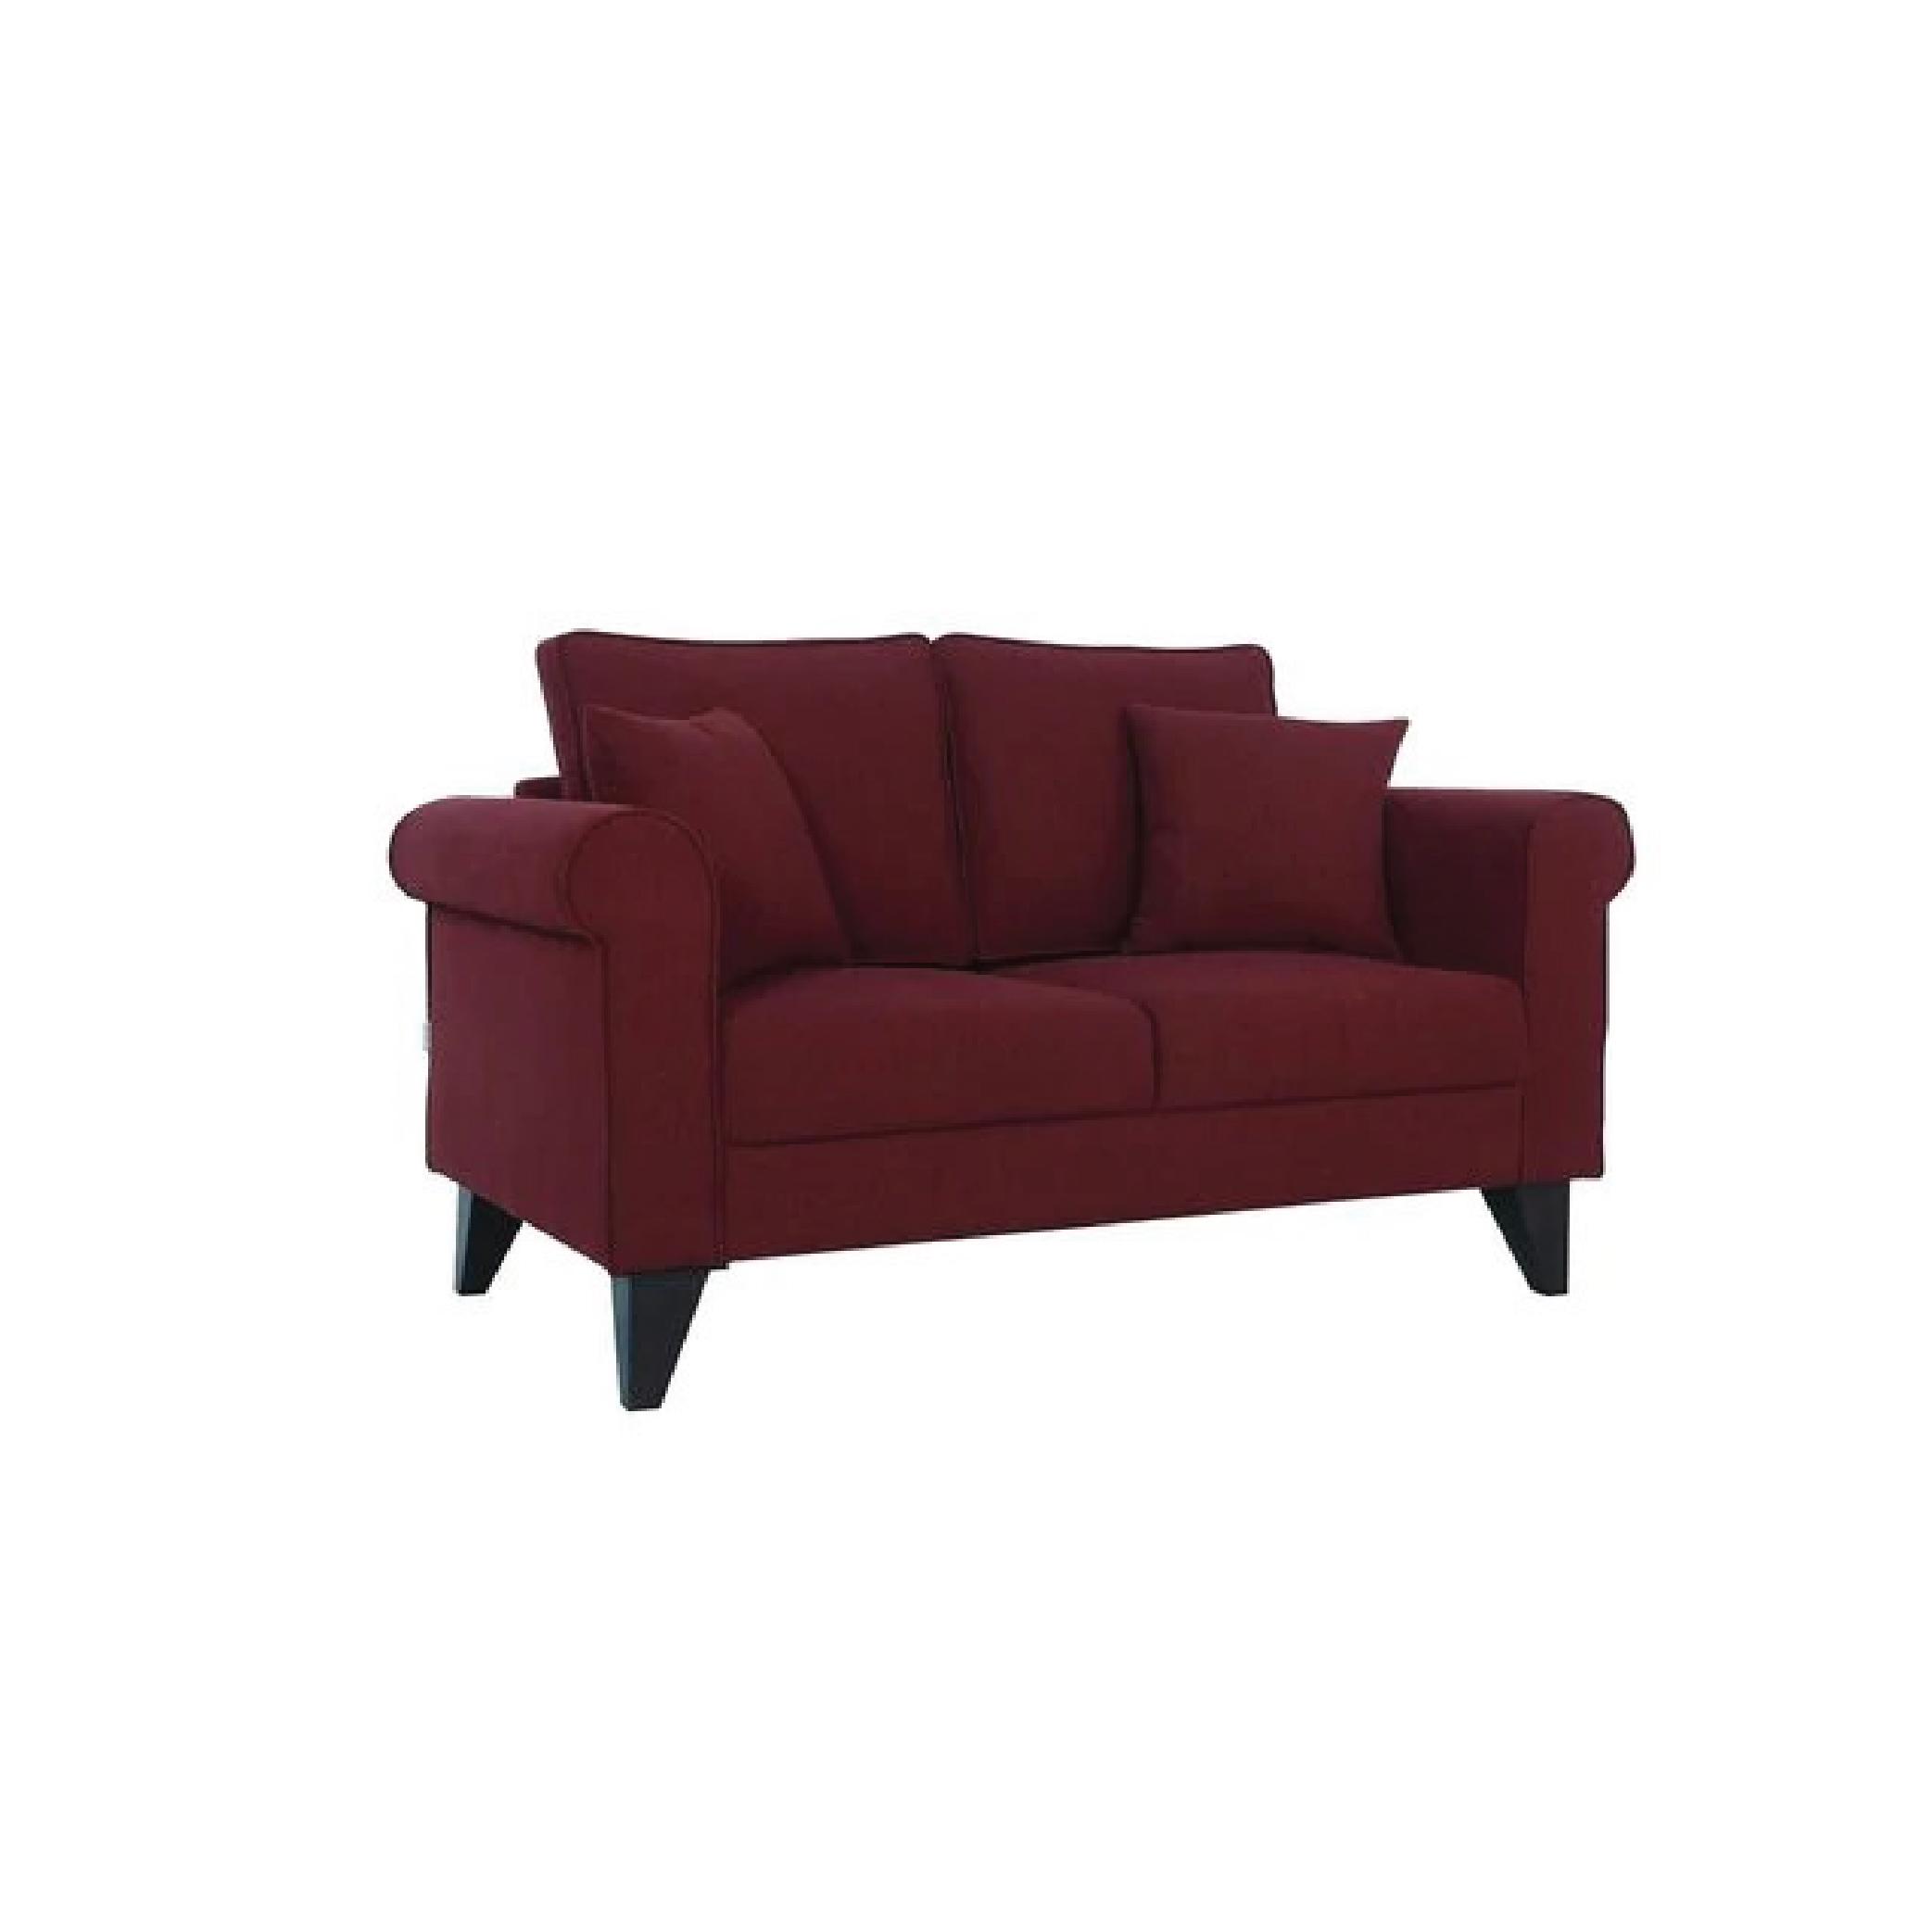 Sarno Two Seater Sofa in Garnet Red Colour